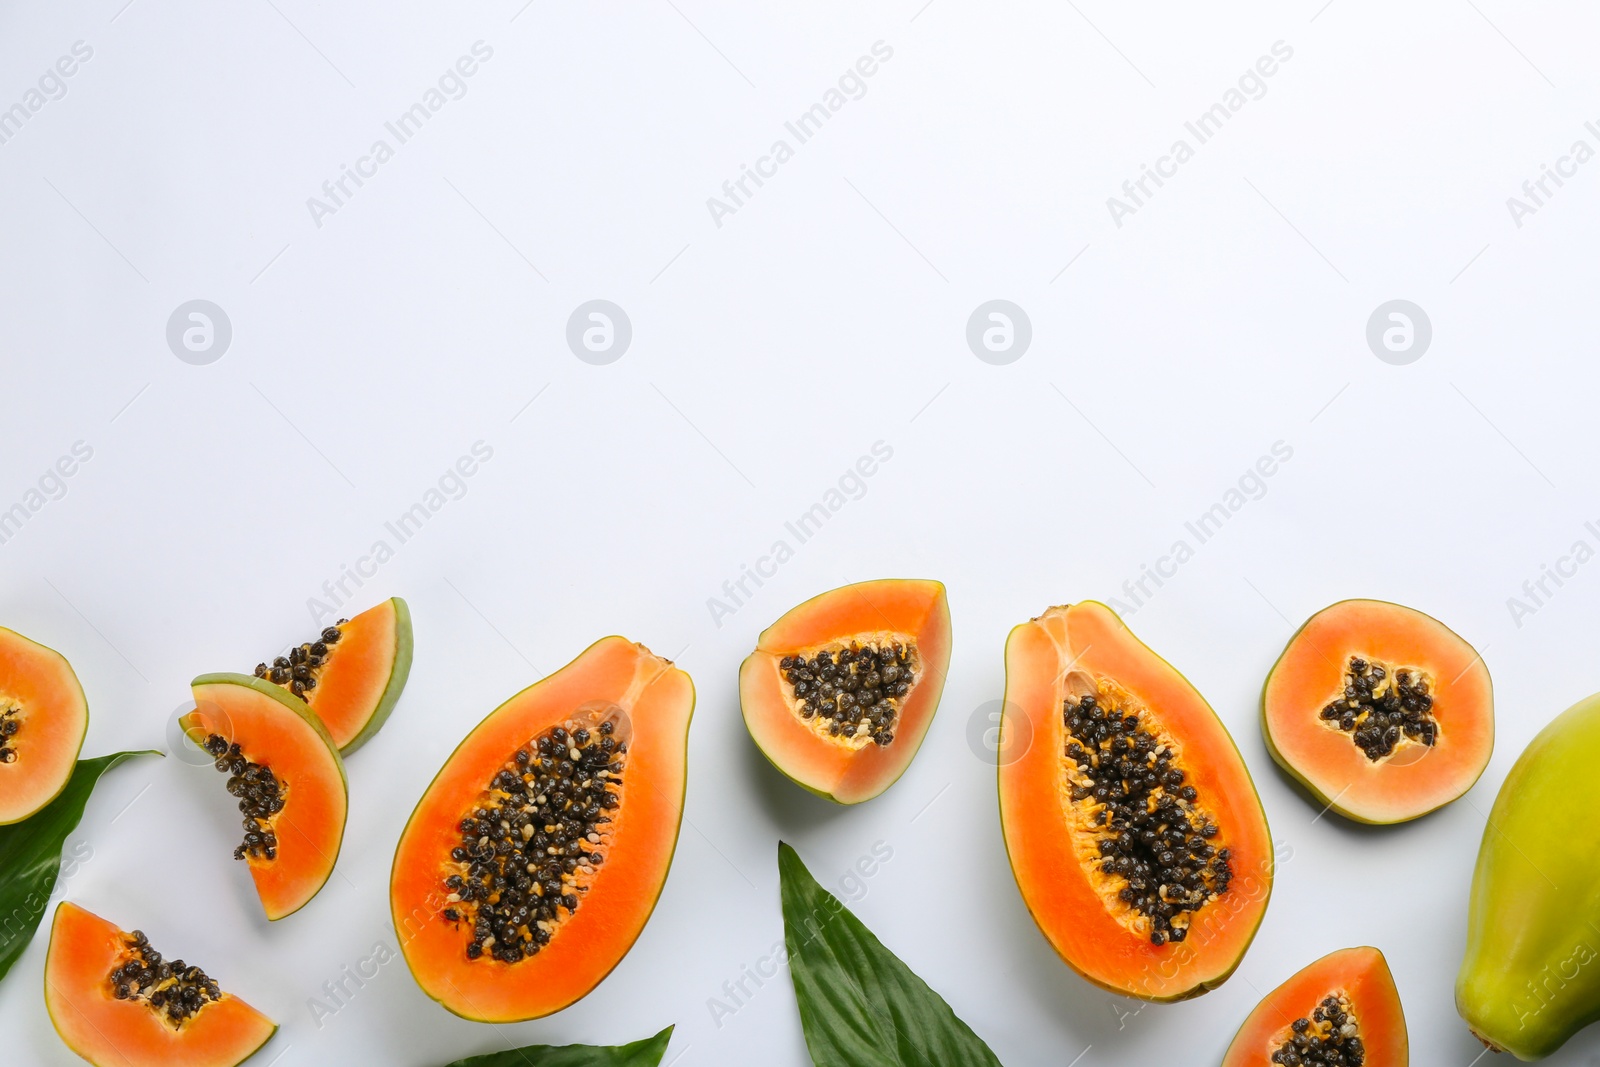 Photo of Fresh ripe papaya fruits on white background, flat lay. Space for text